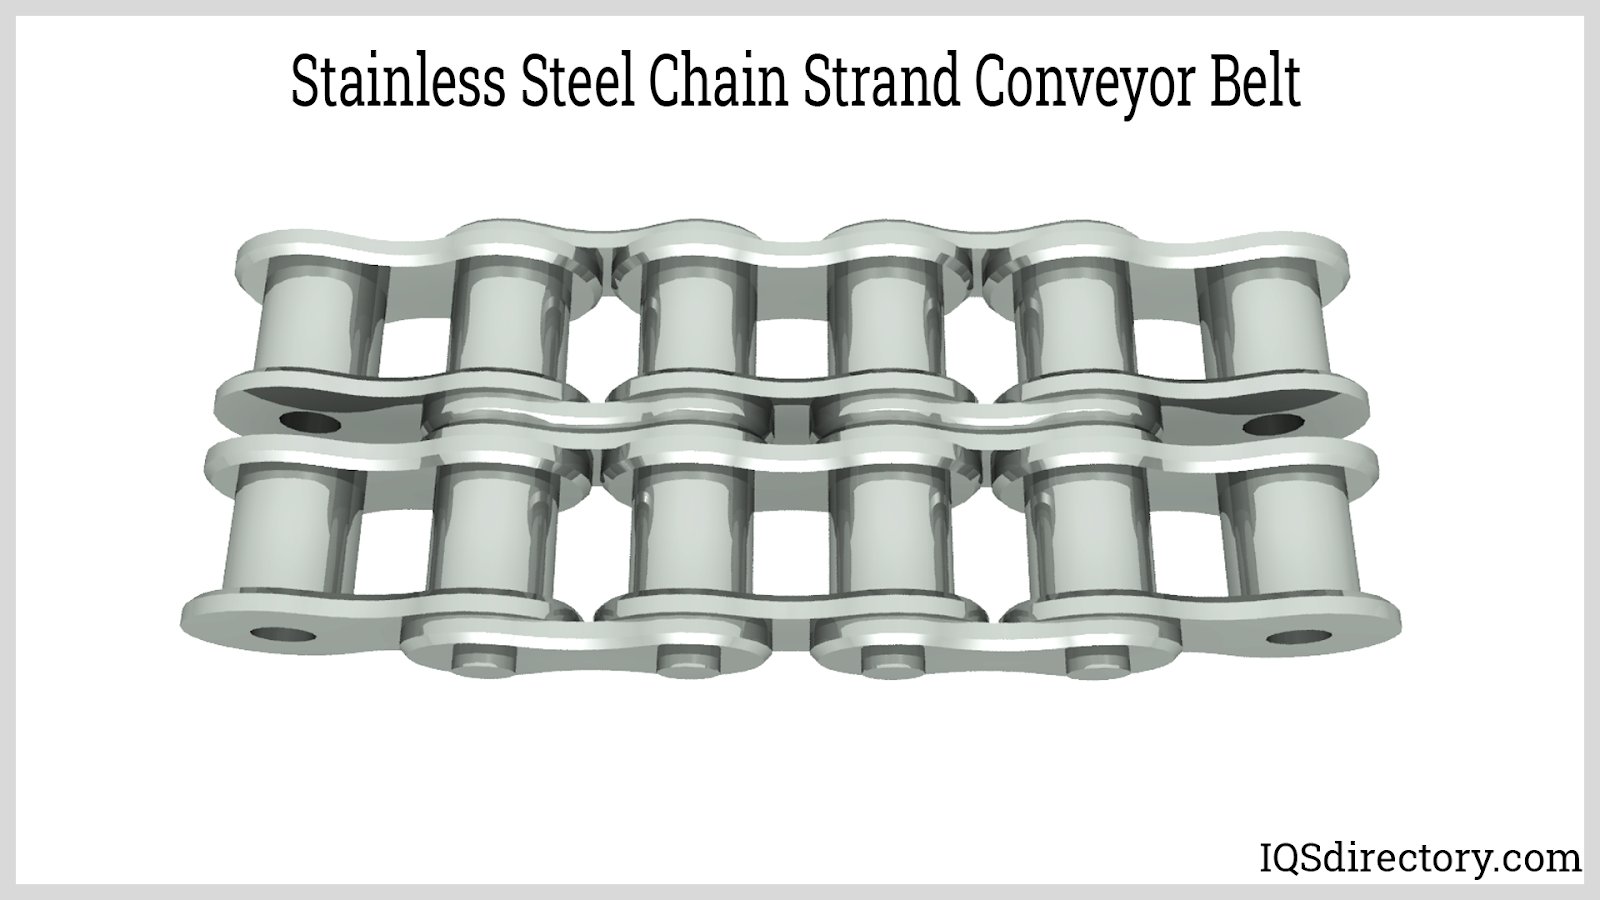 Stainless Steel Chain Strand Conveyor Belt